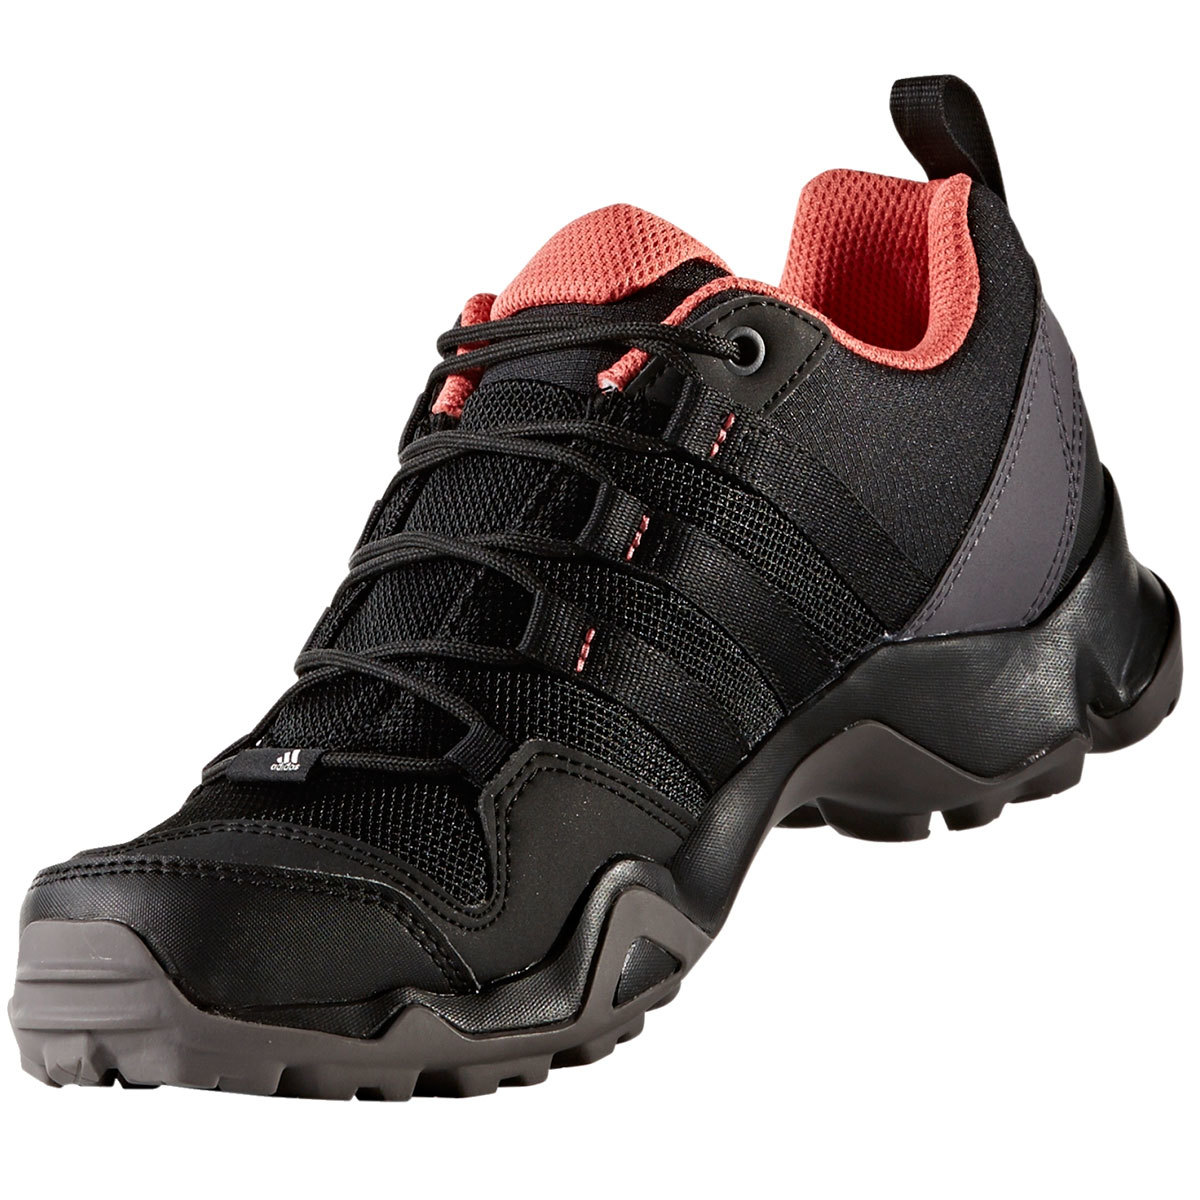 adidas terrex ax2r hiking shoes